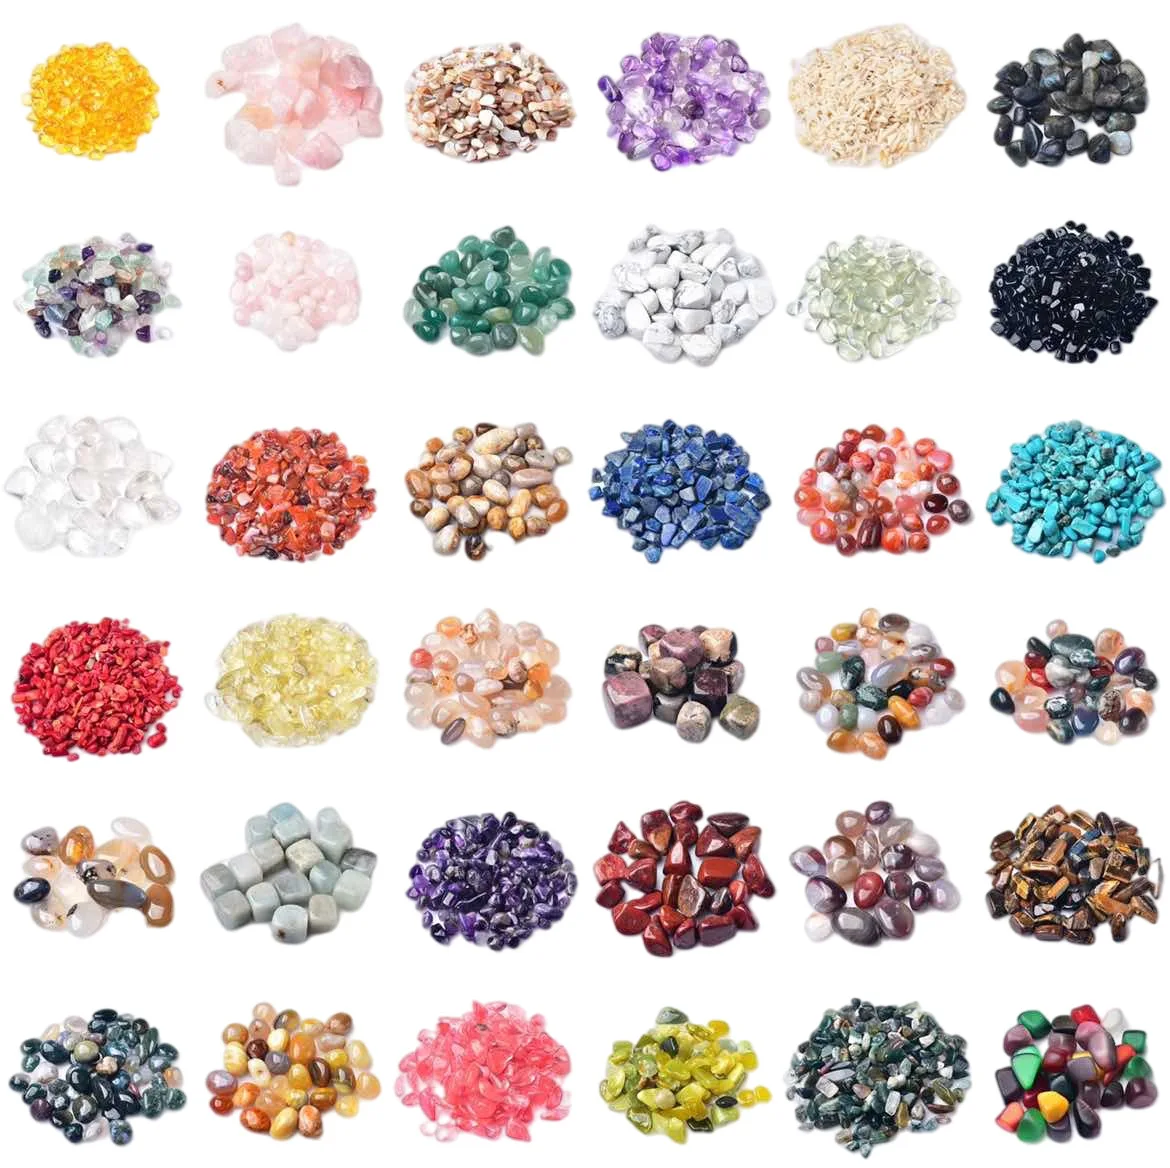 

Chip Stone Gravel 5-8mm Rubble Stone Gemstone Beads Irregular Crushed Stone Wholesale Loose Gemstone Beads For Jewelry Making, Color